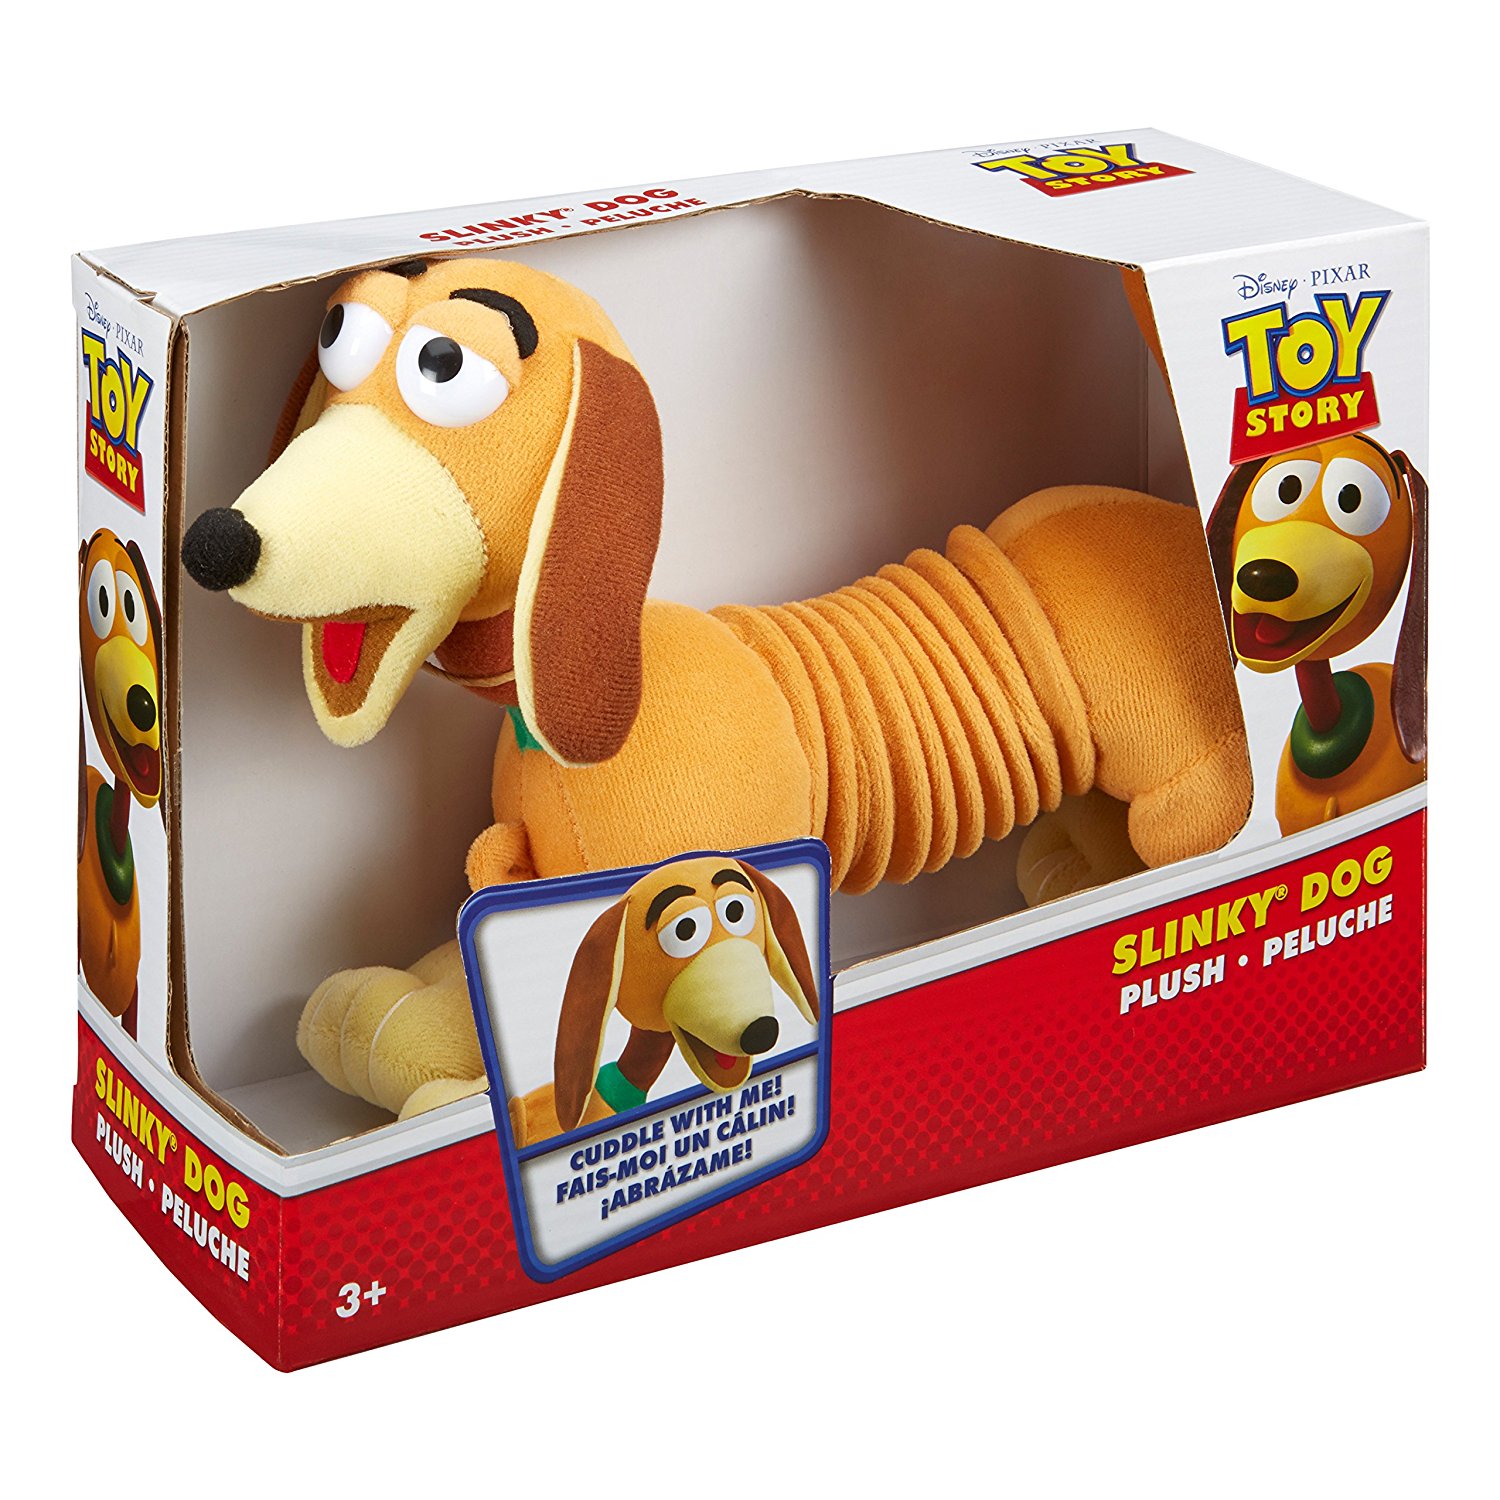 Amazon.com: Slinky Disney Pixar Toy Story Plush Dog: Toys & Games